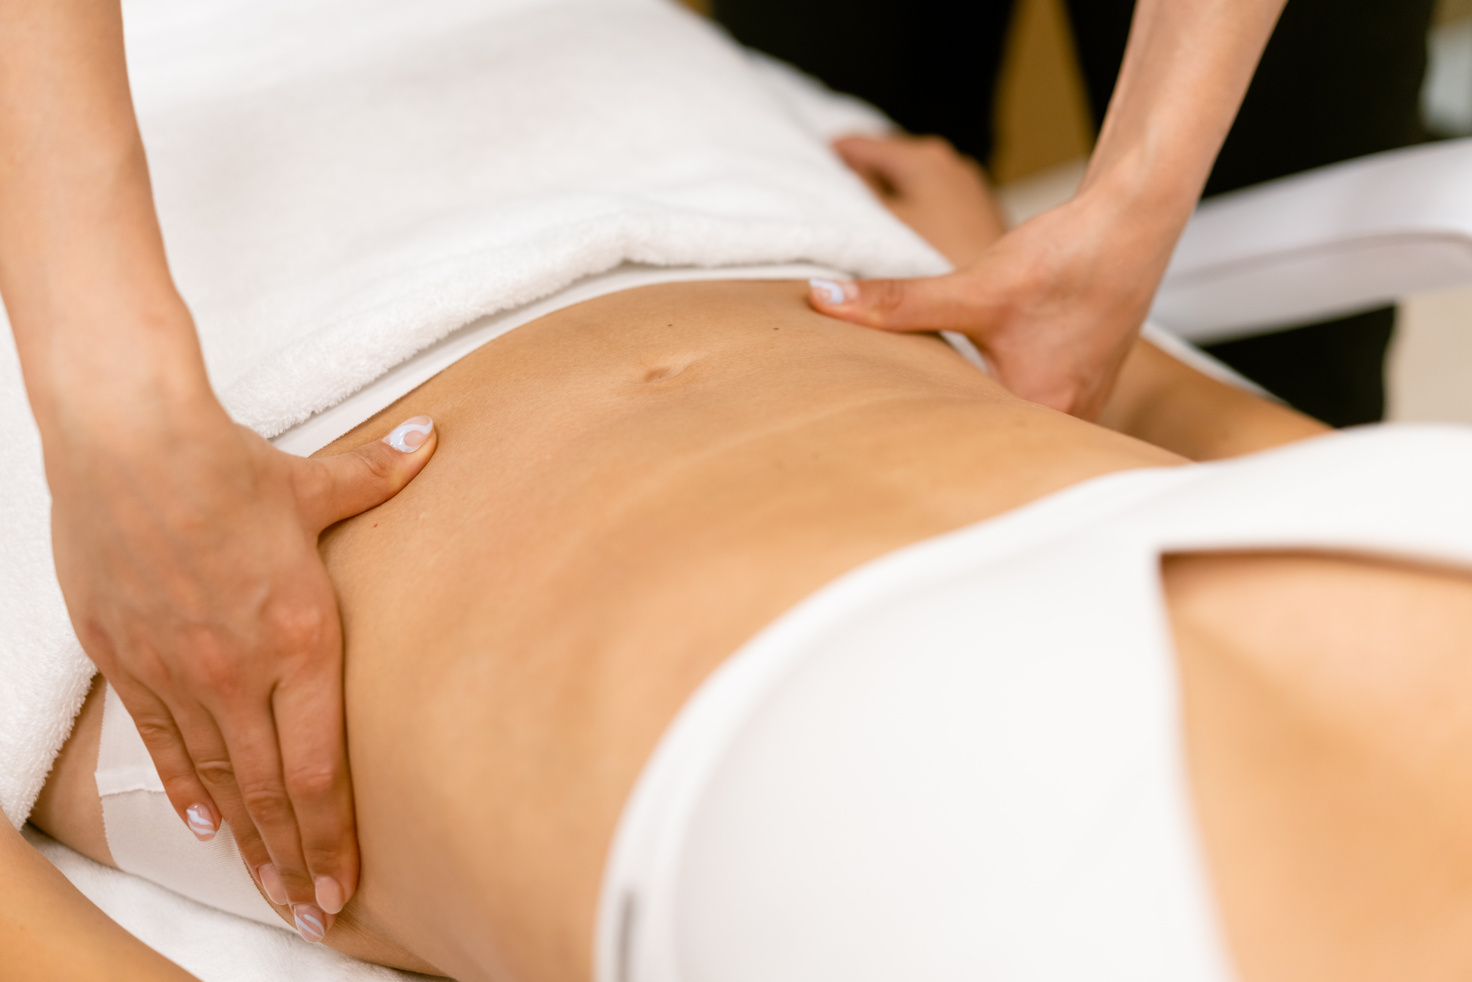 Woman Having a Belly Massage 